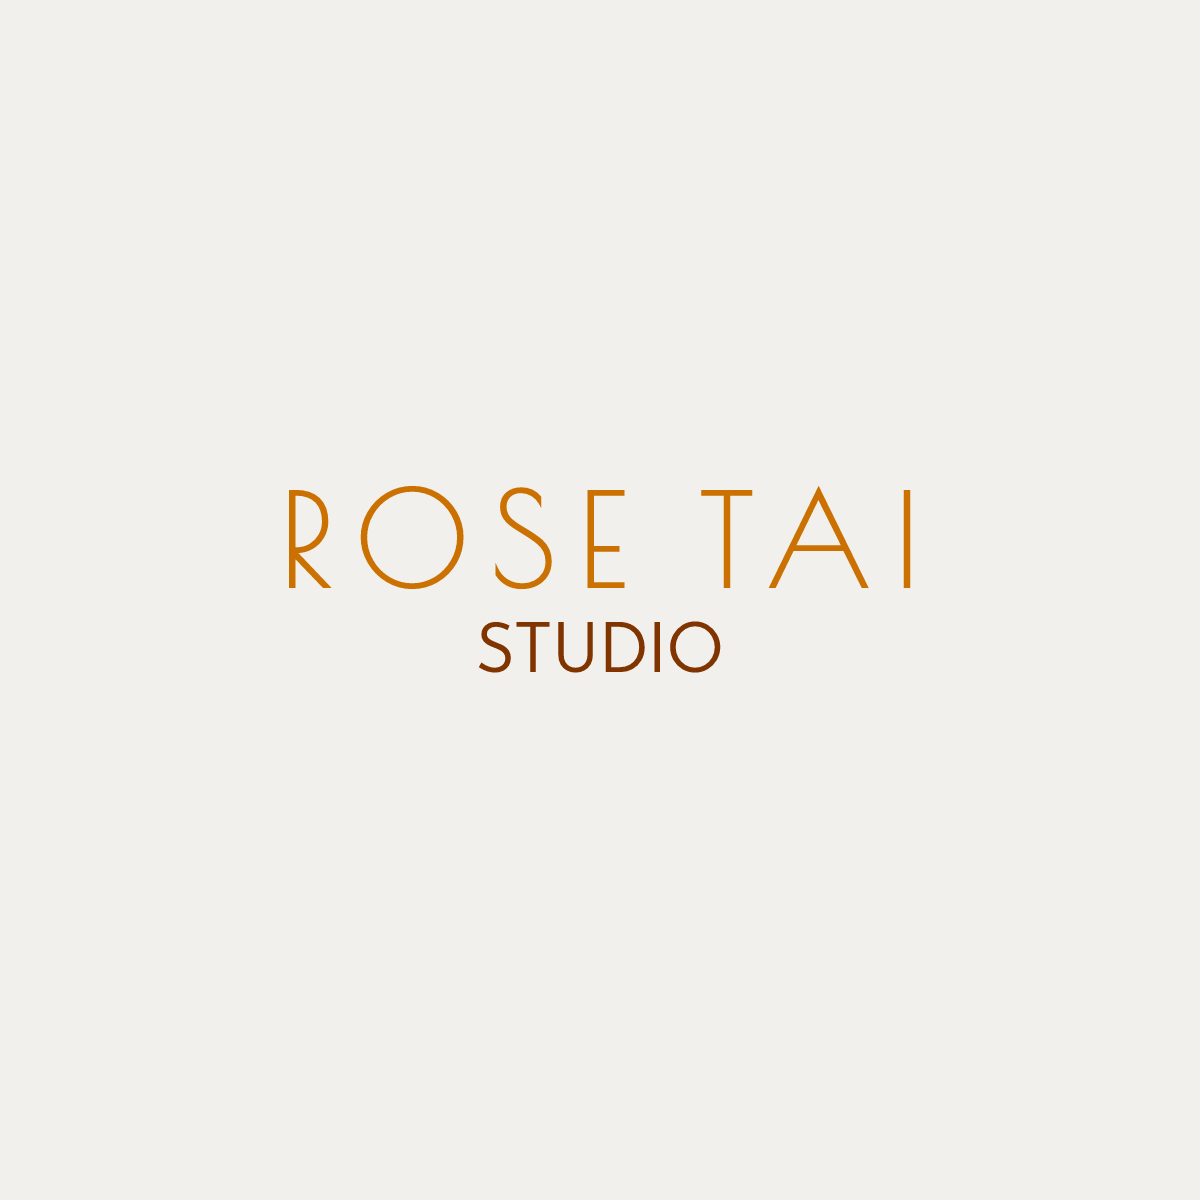 ROSE TAI STUDIO LOGO.png